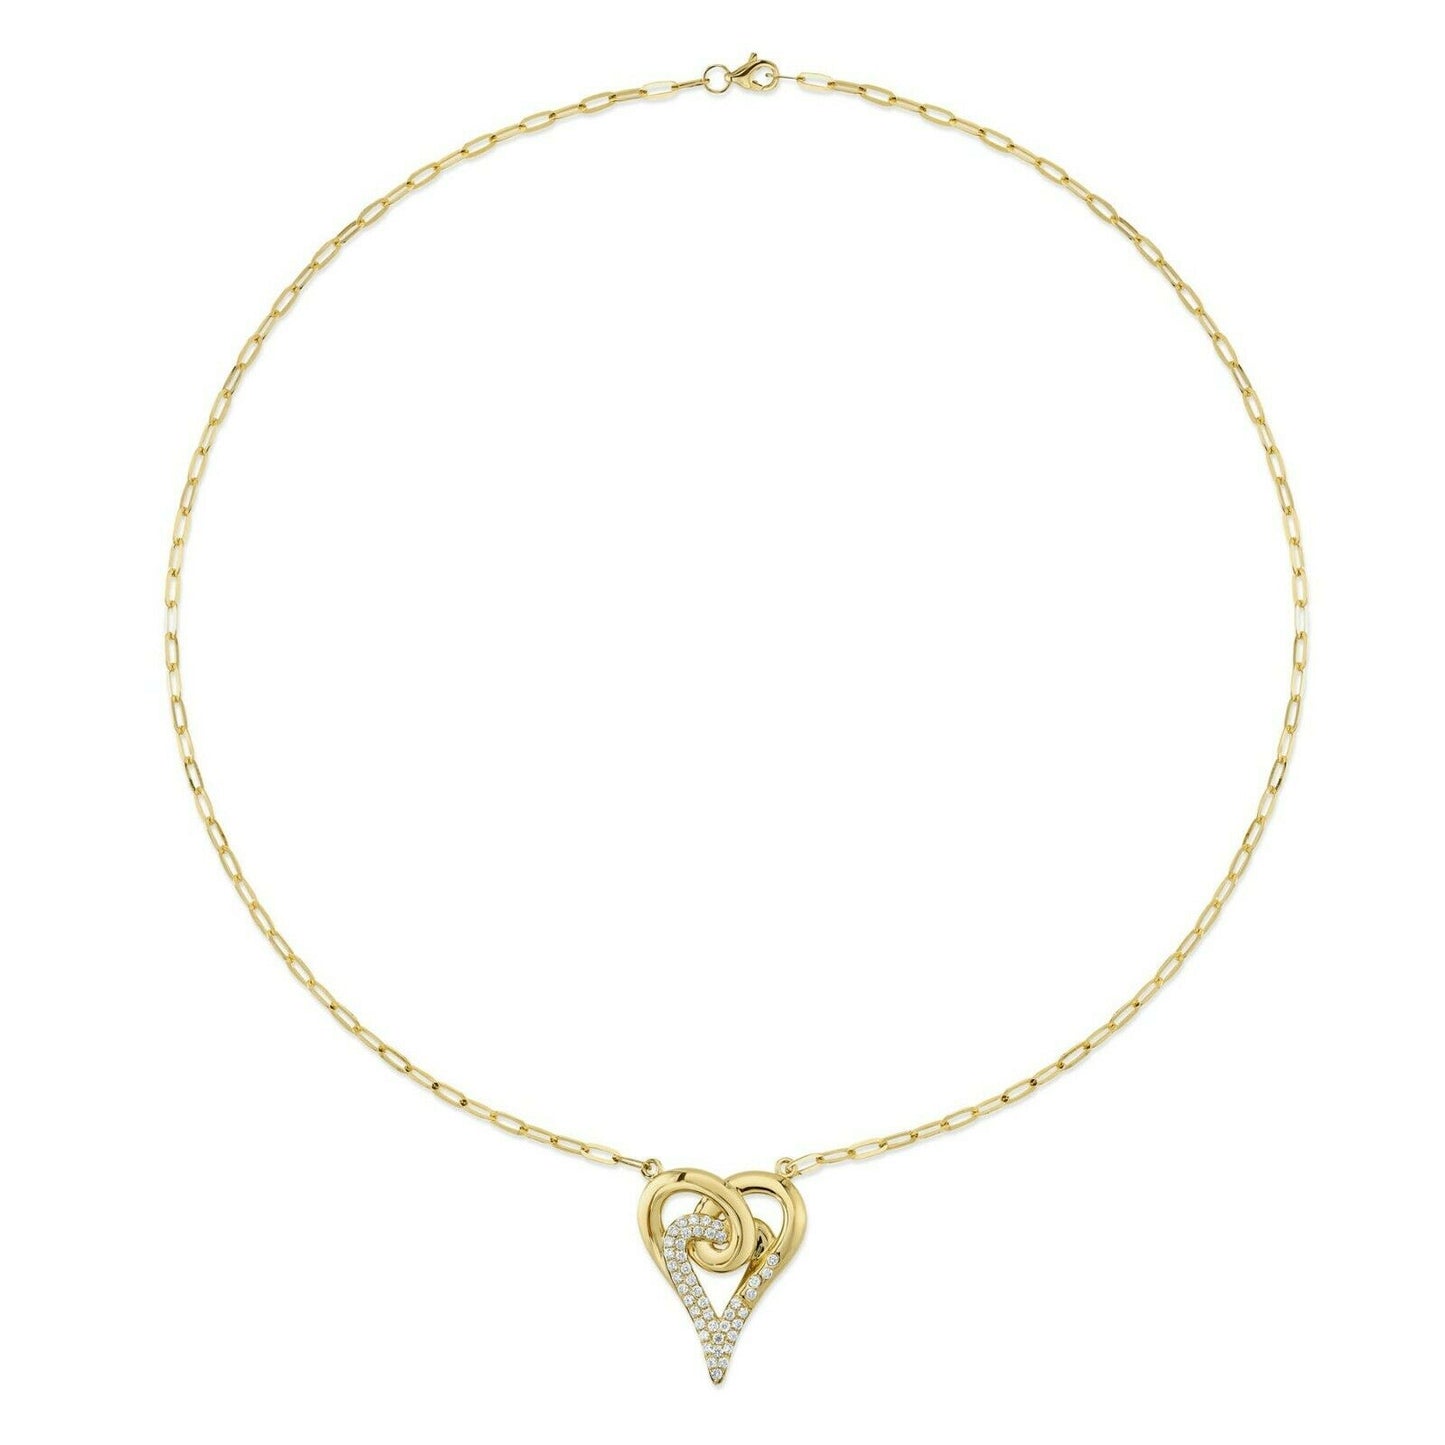 14K Gold 0.52CT Diamond Heart Pendant Necklace Paper Clip Chain Round Cut